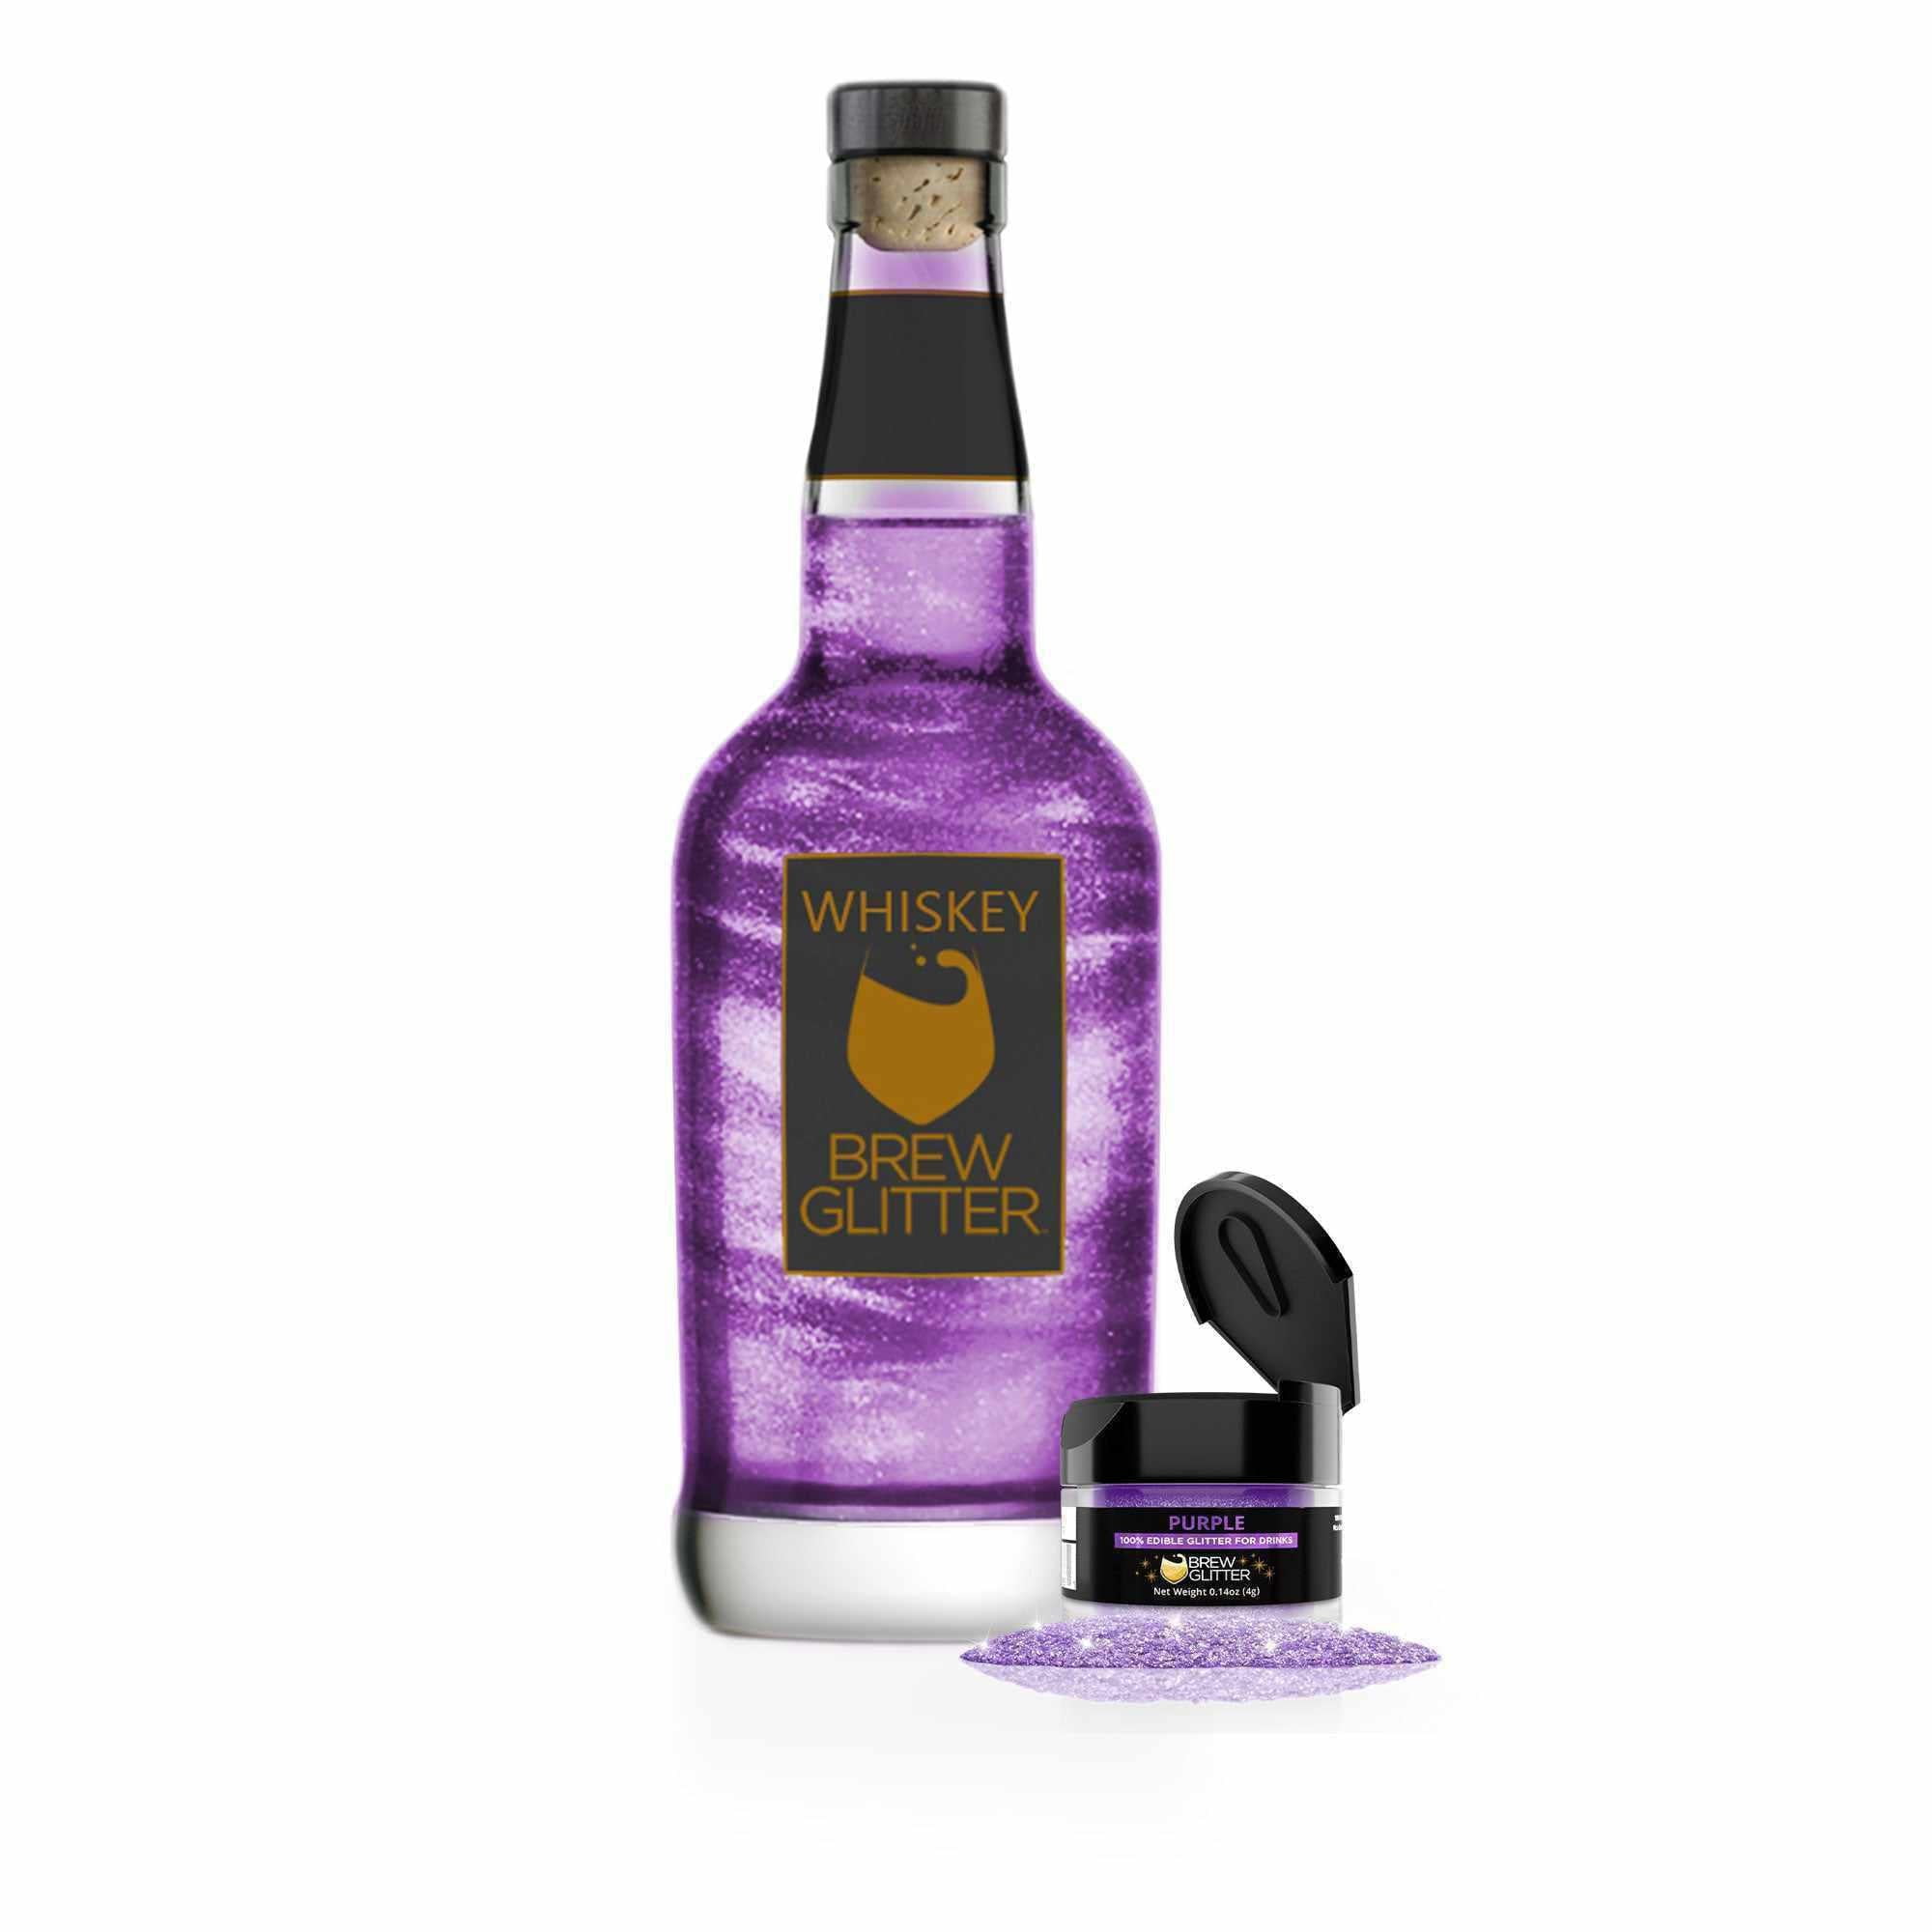 Purple Brew Glitter | Glitter for Cocktails, Spirits & martinis! 4G